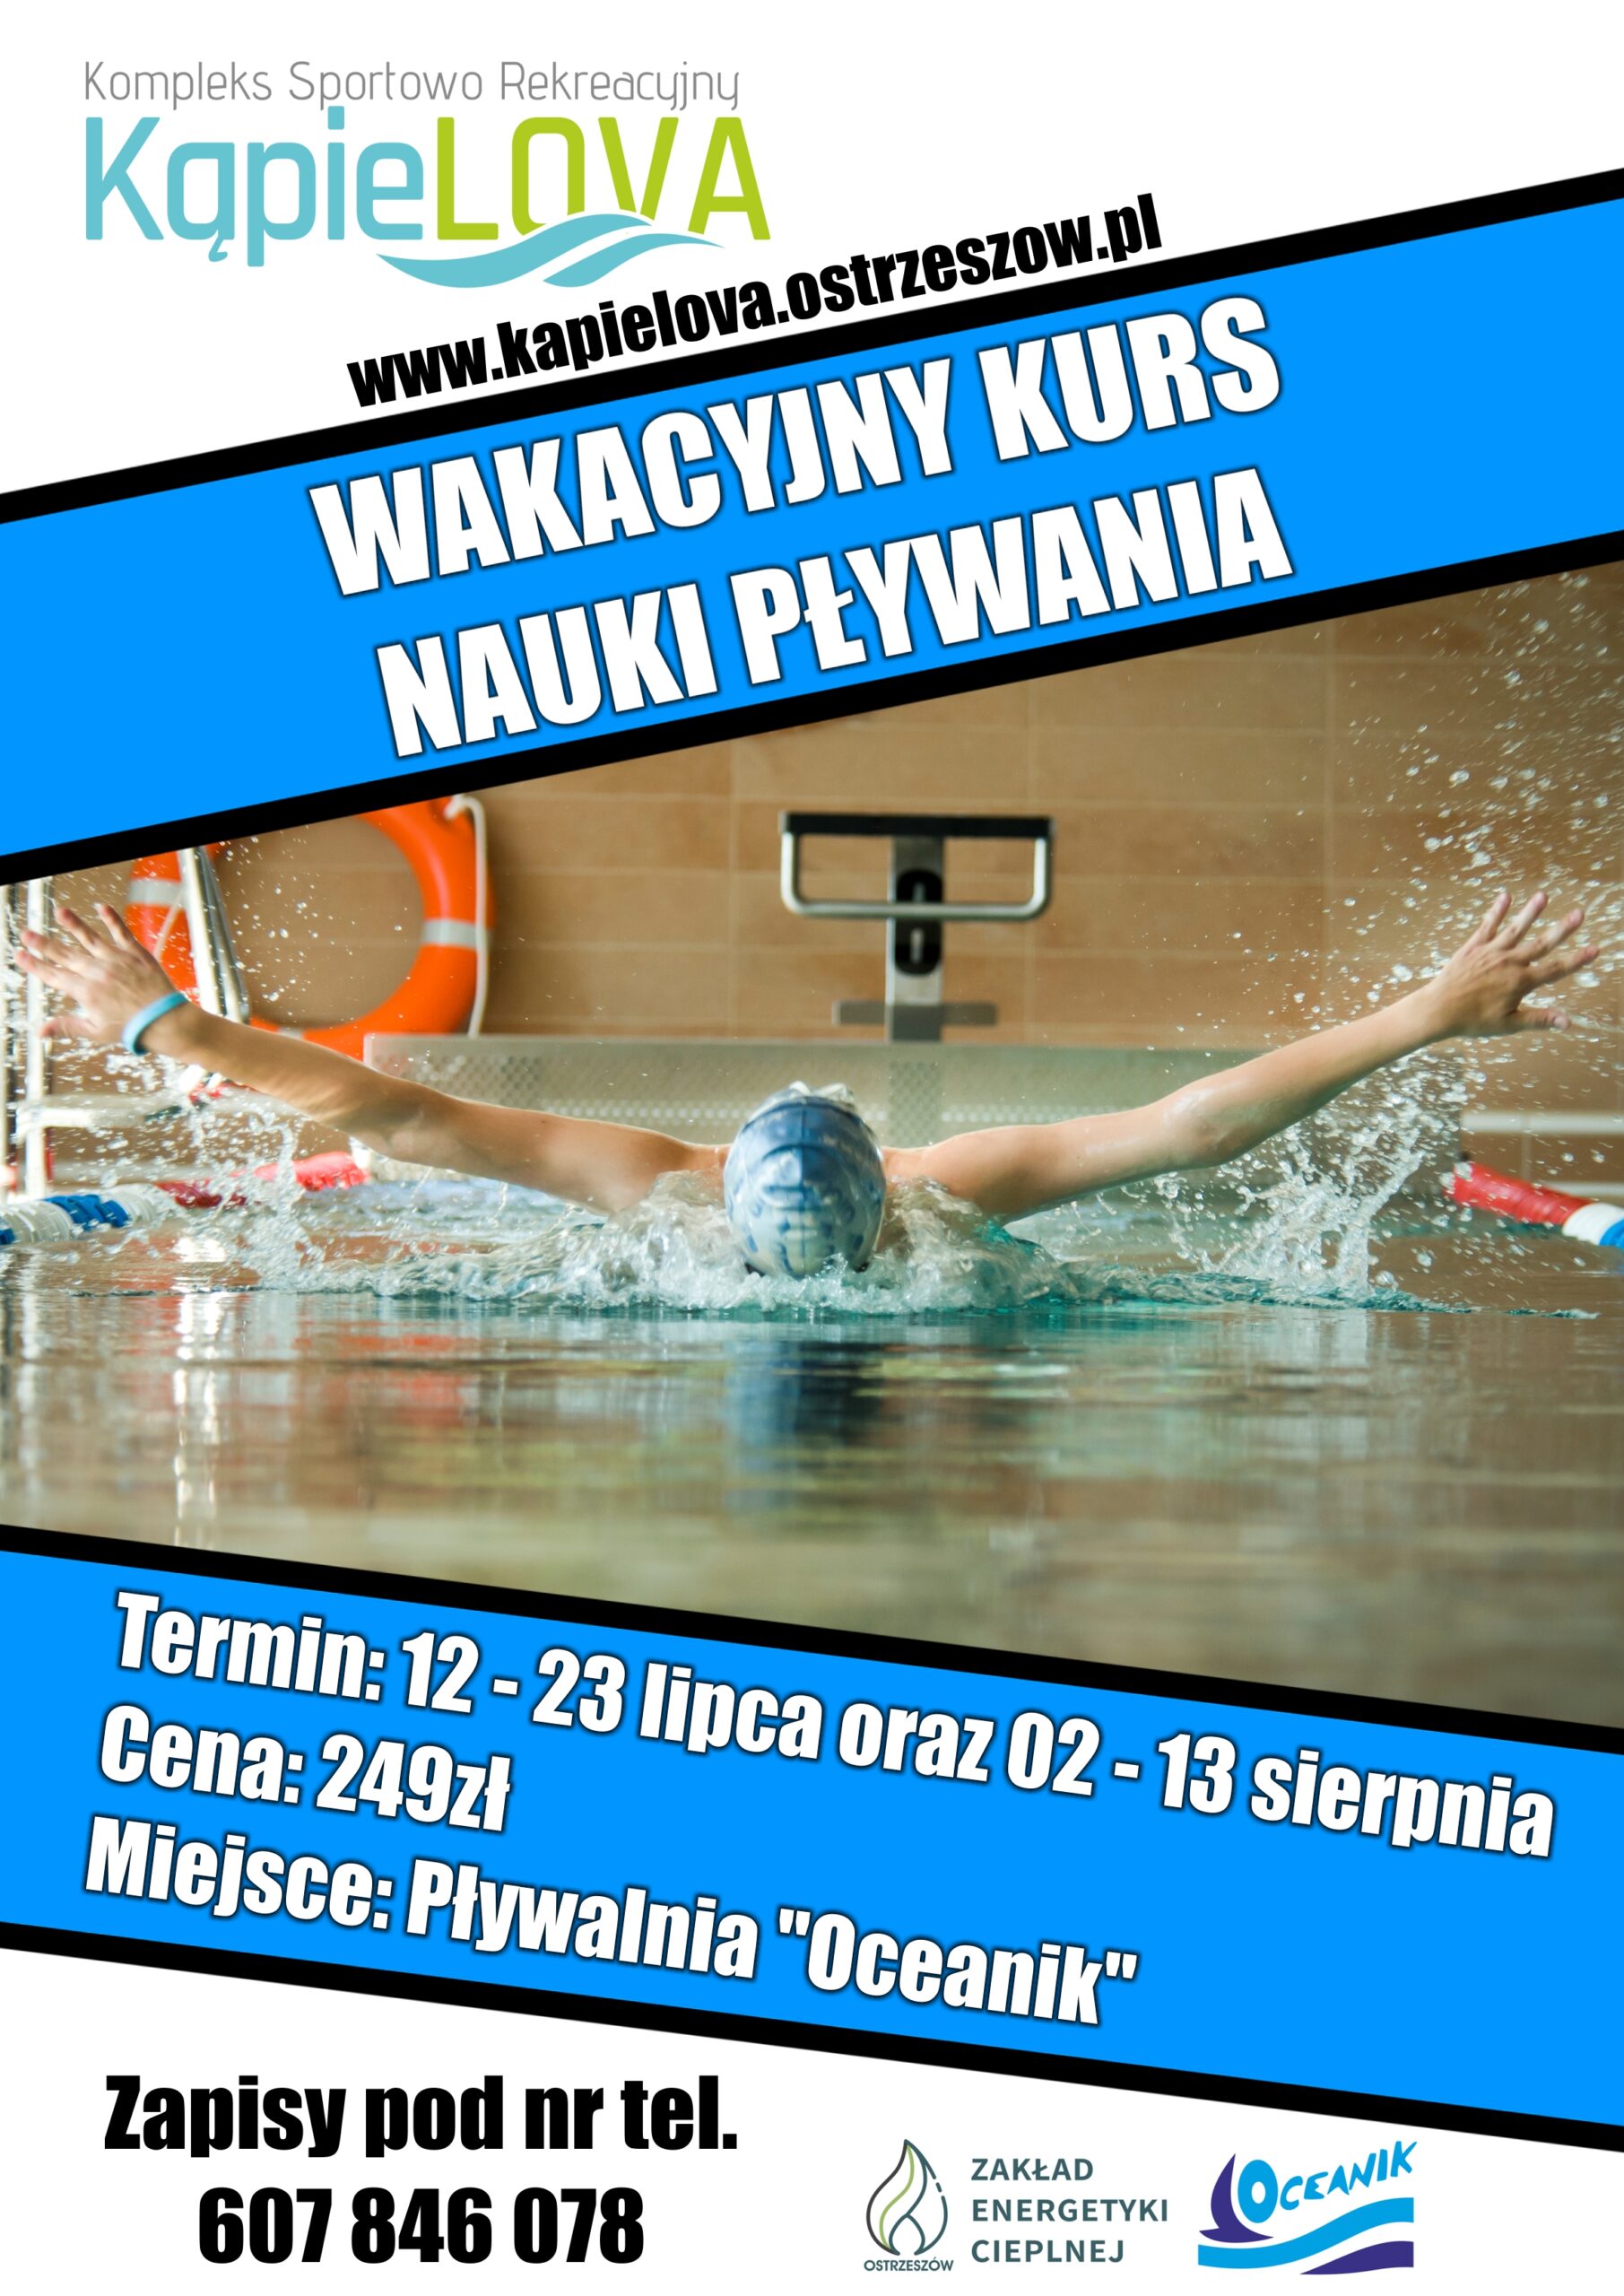 You are currently viewing Wakacyjny kurs nauki pływania